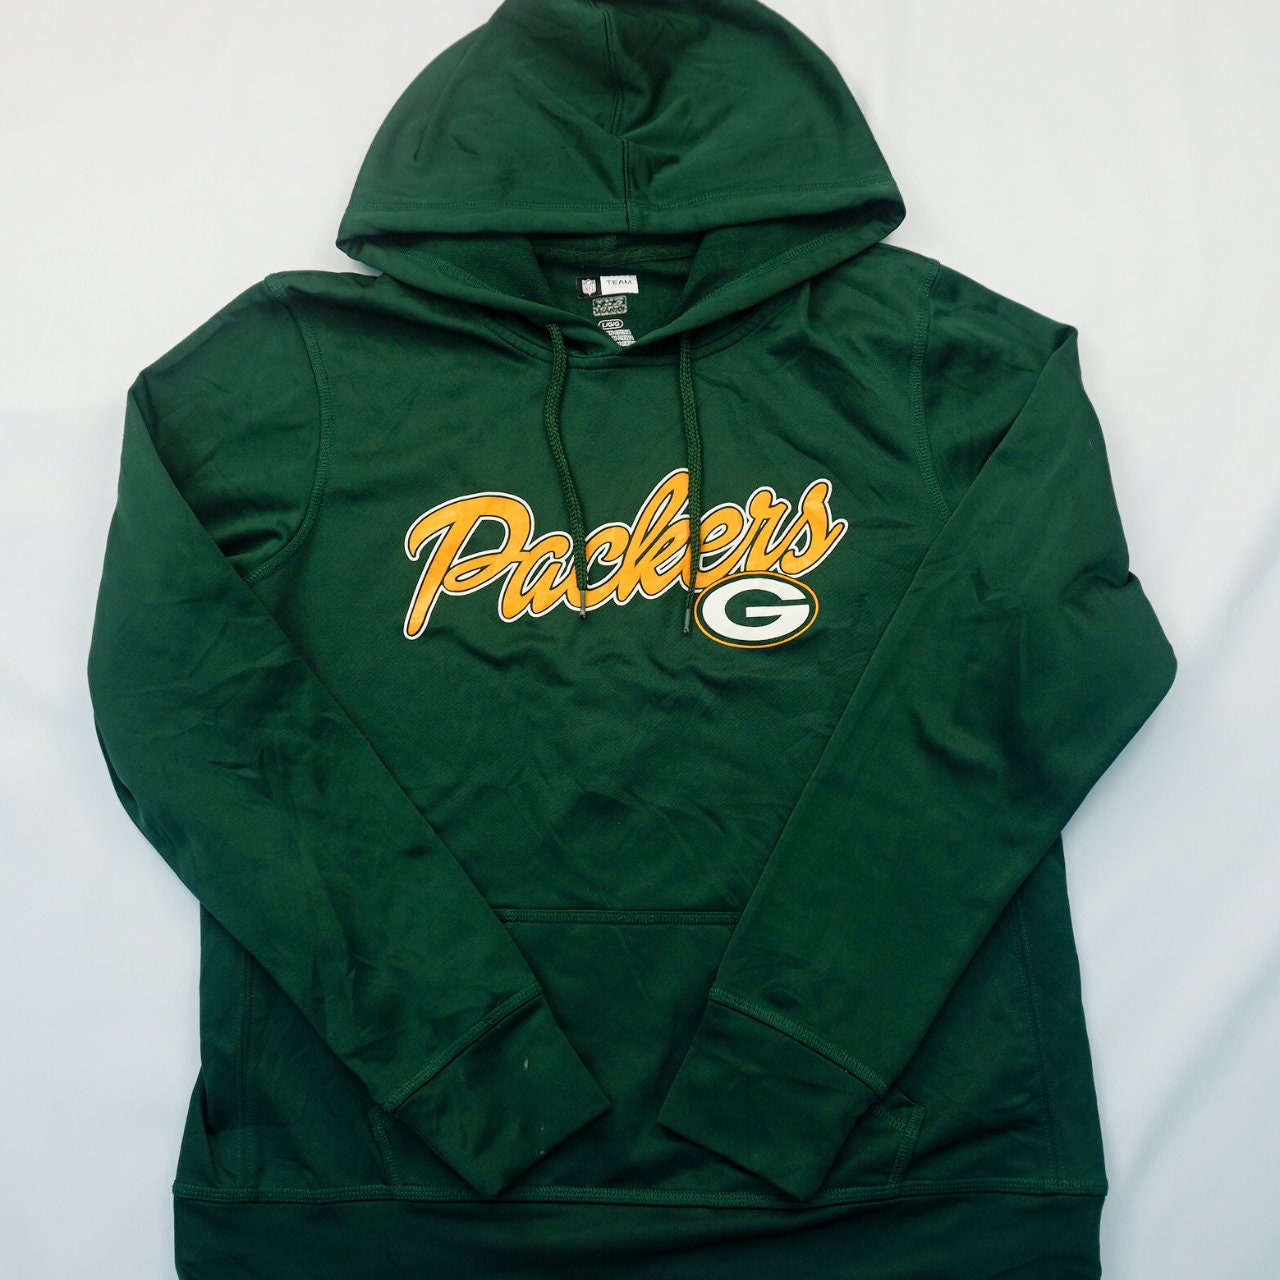 Vintage Men's Green NFL Green Bay Packers hoody in tech / | Etsy